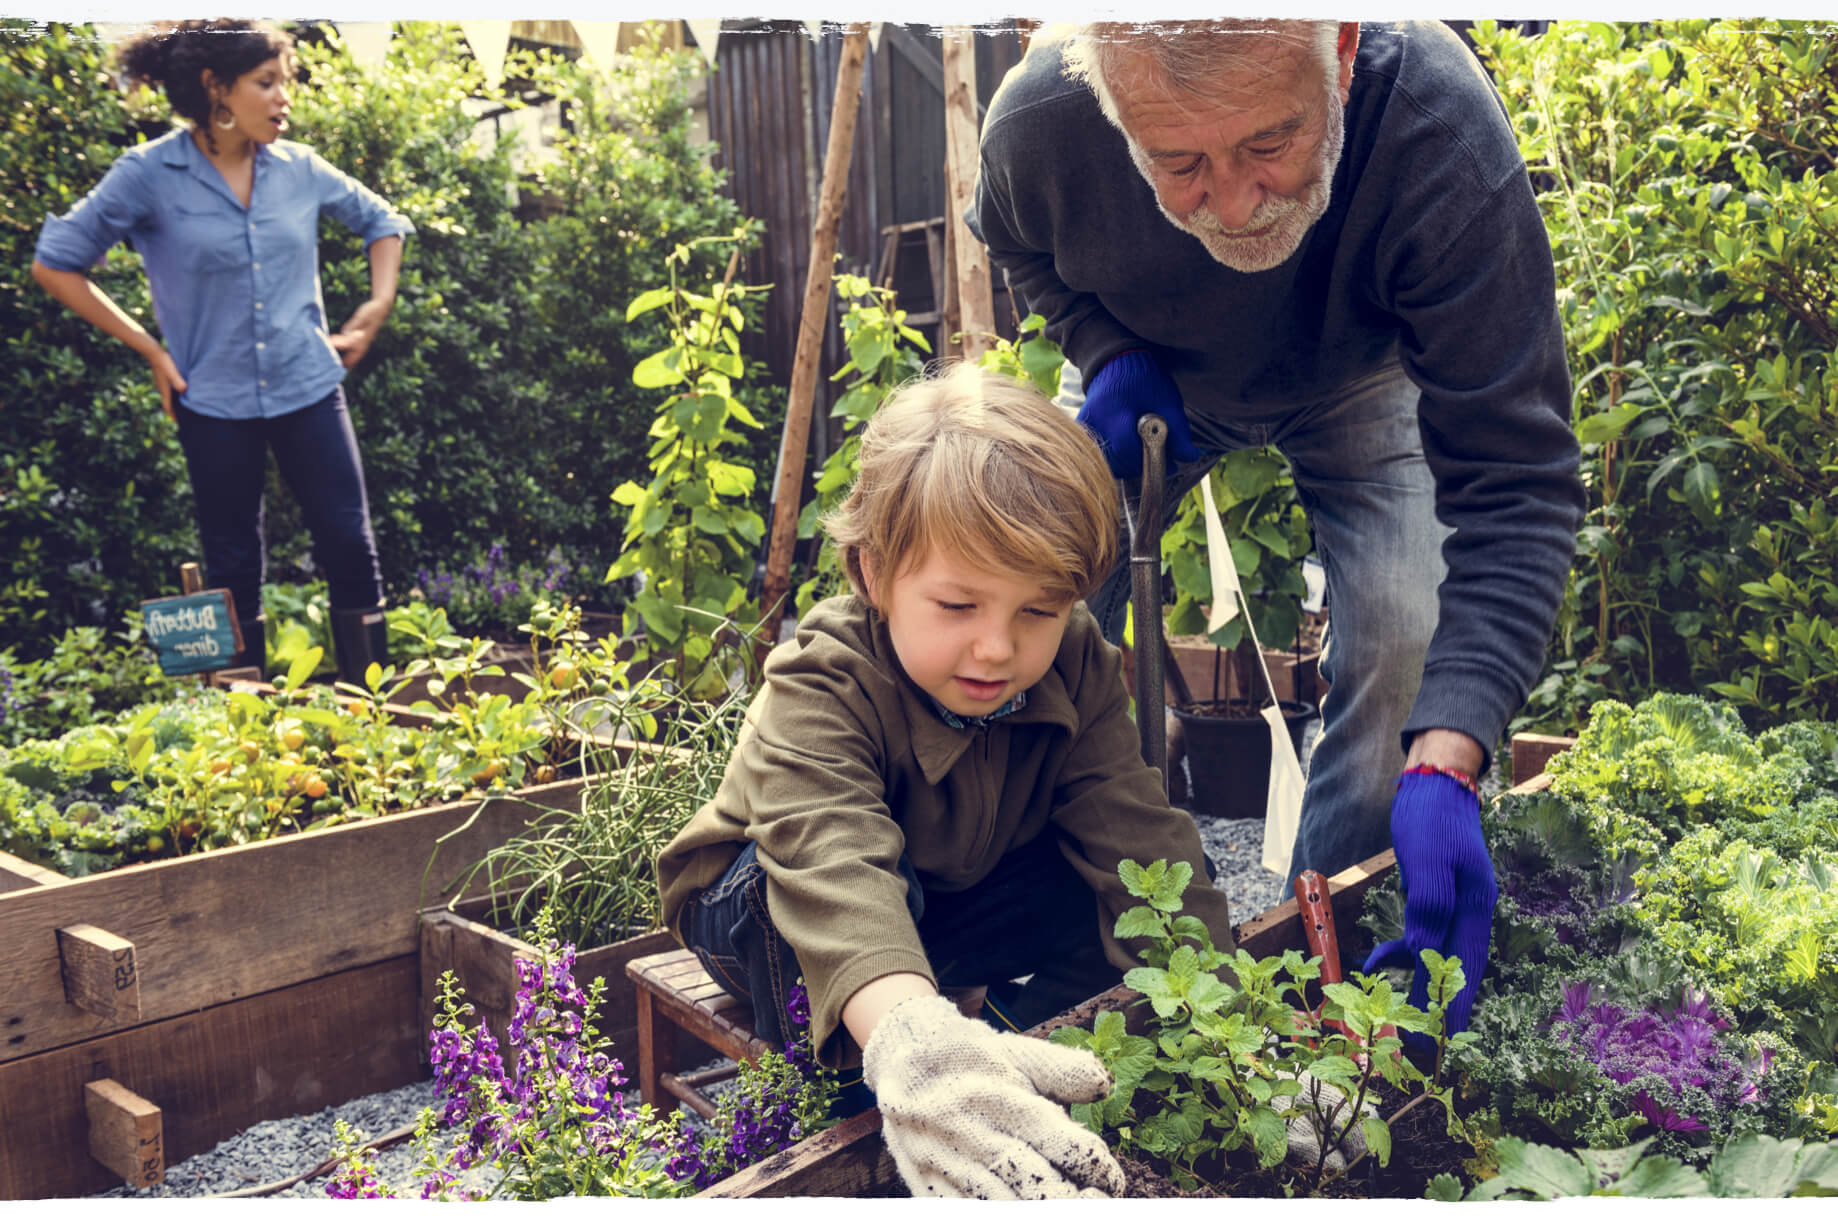 An older man shares a garden activity with a child.